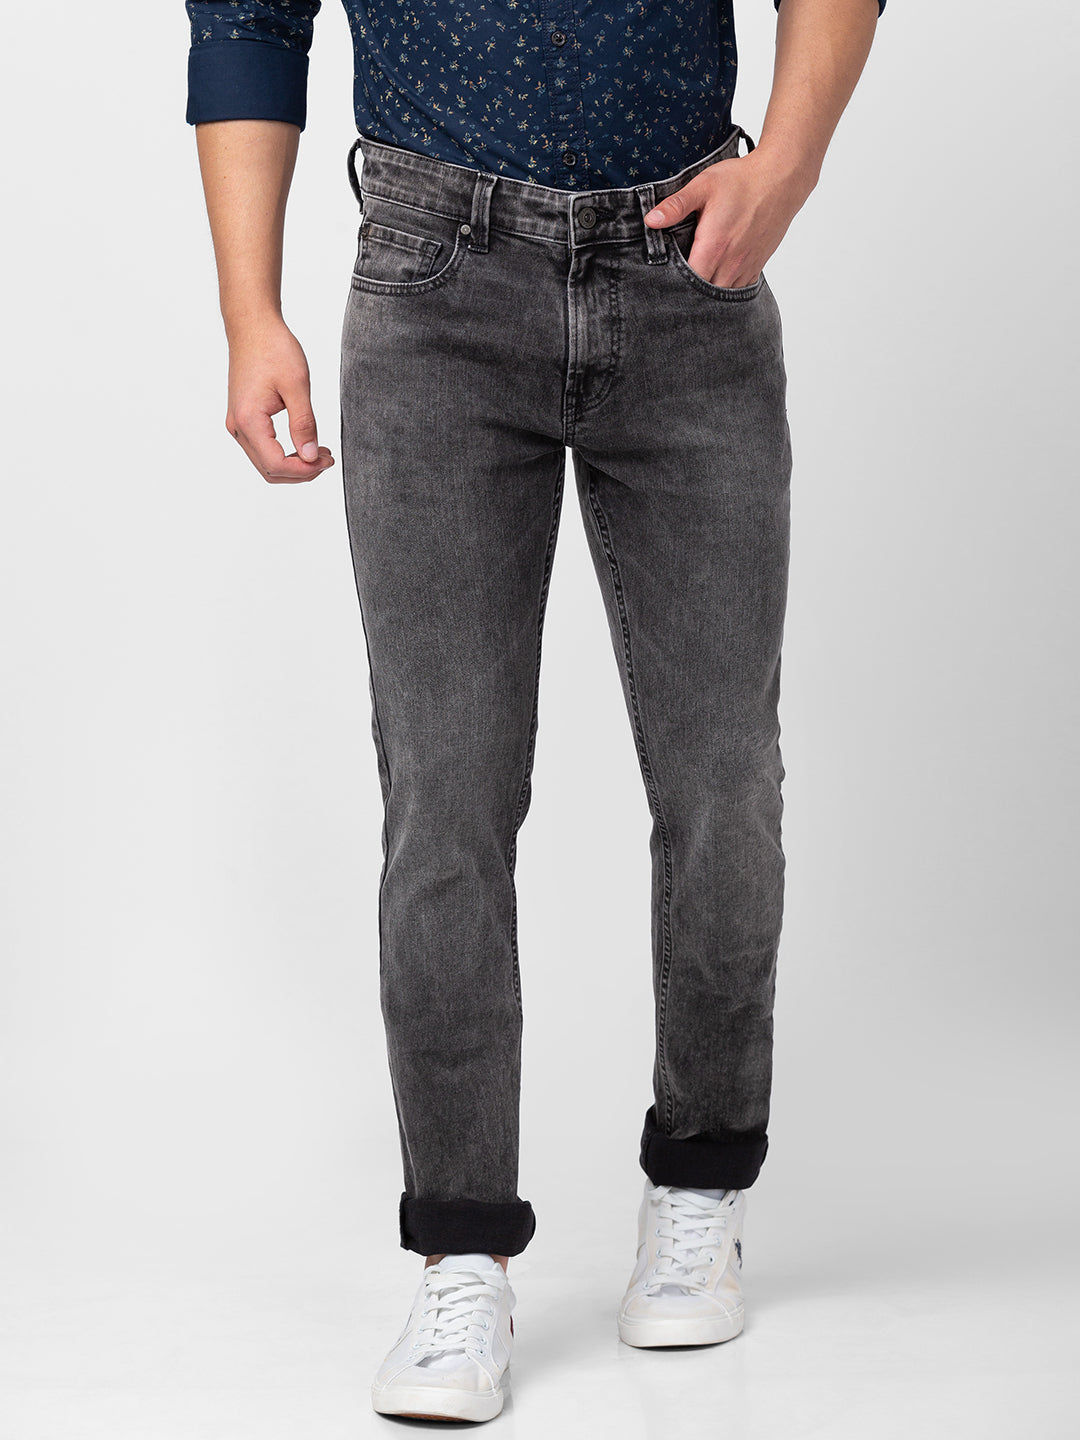 carbon jeans  Mens denim short, Mens denim, Jeans